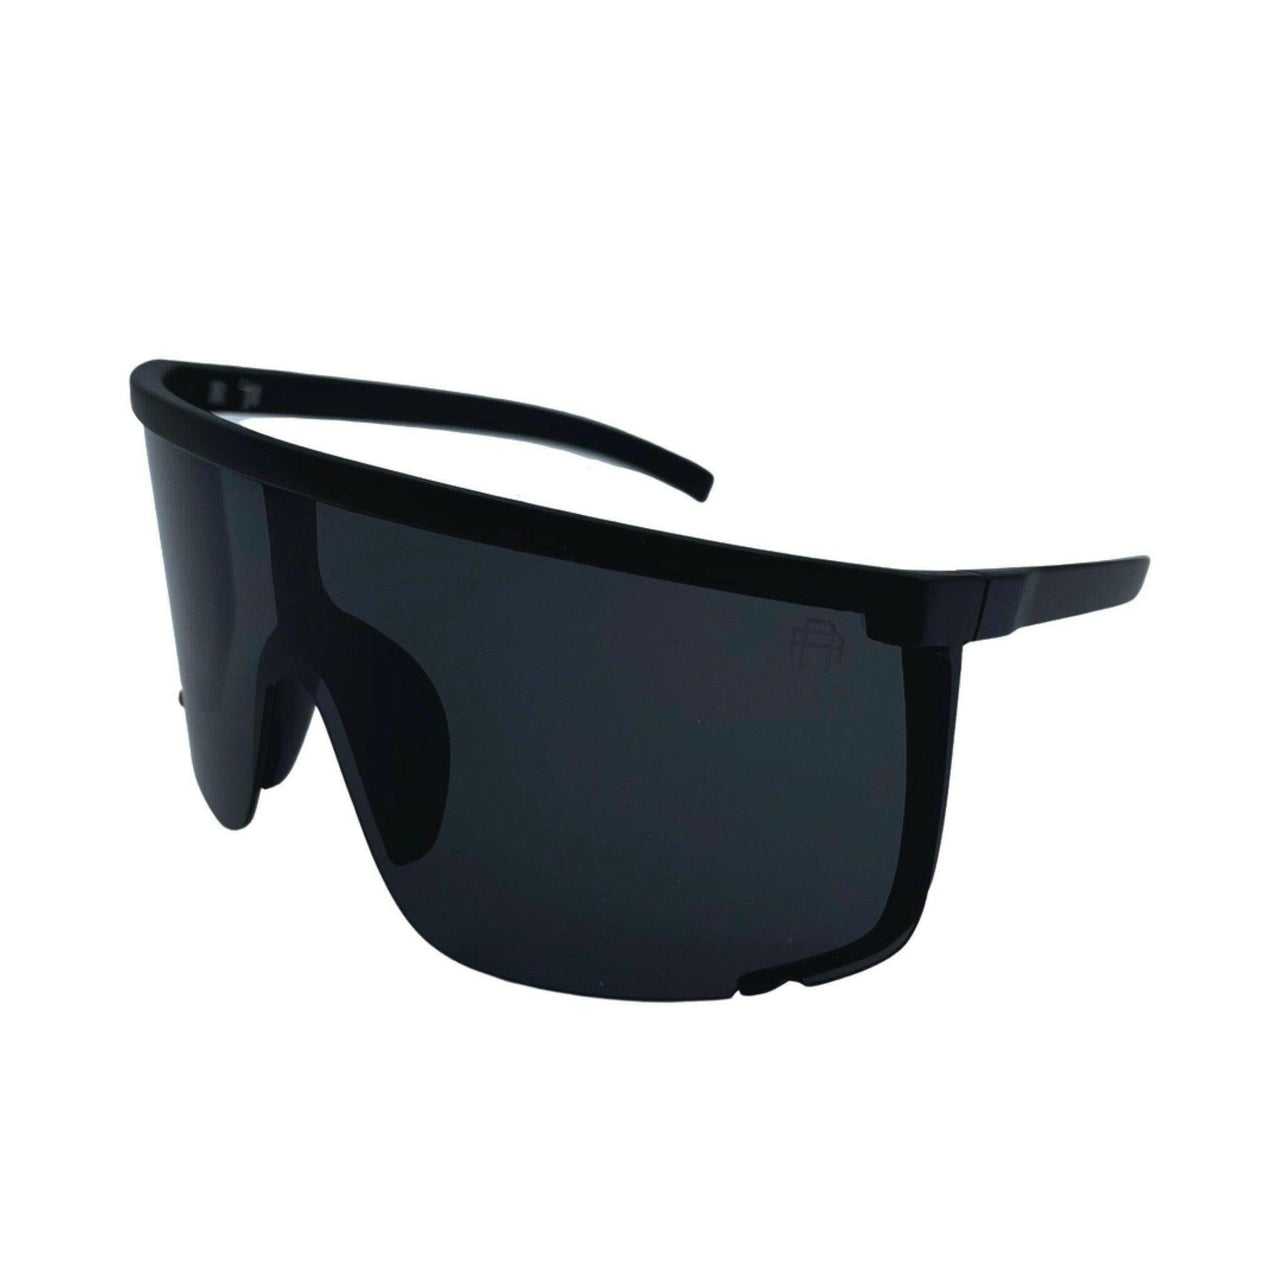 Steezy Gloss Black Sunglasses